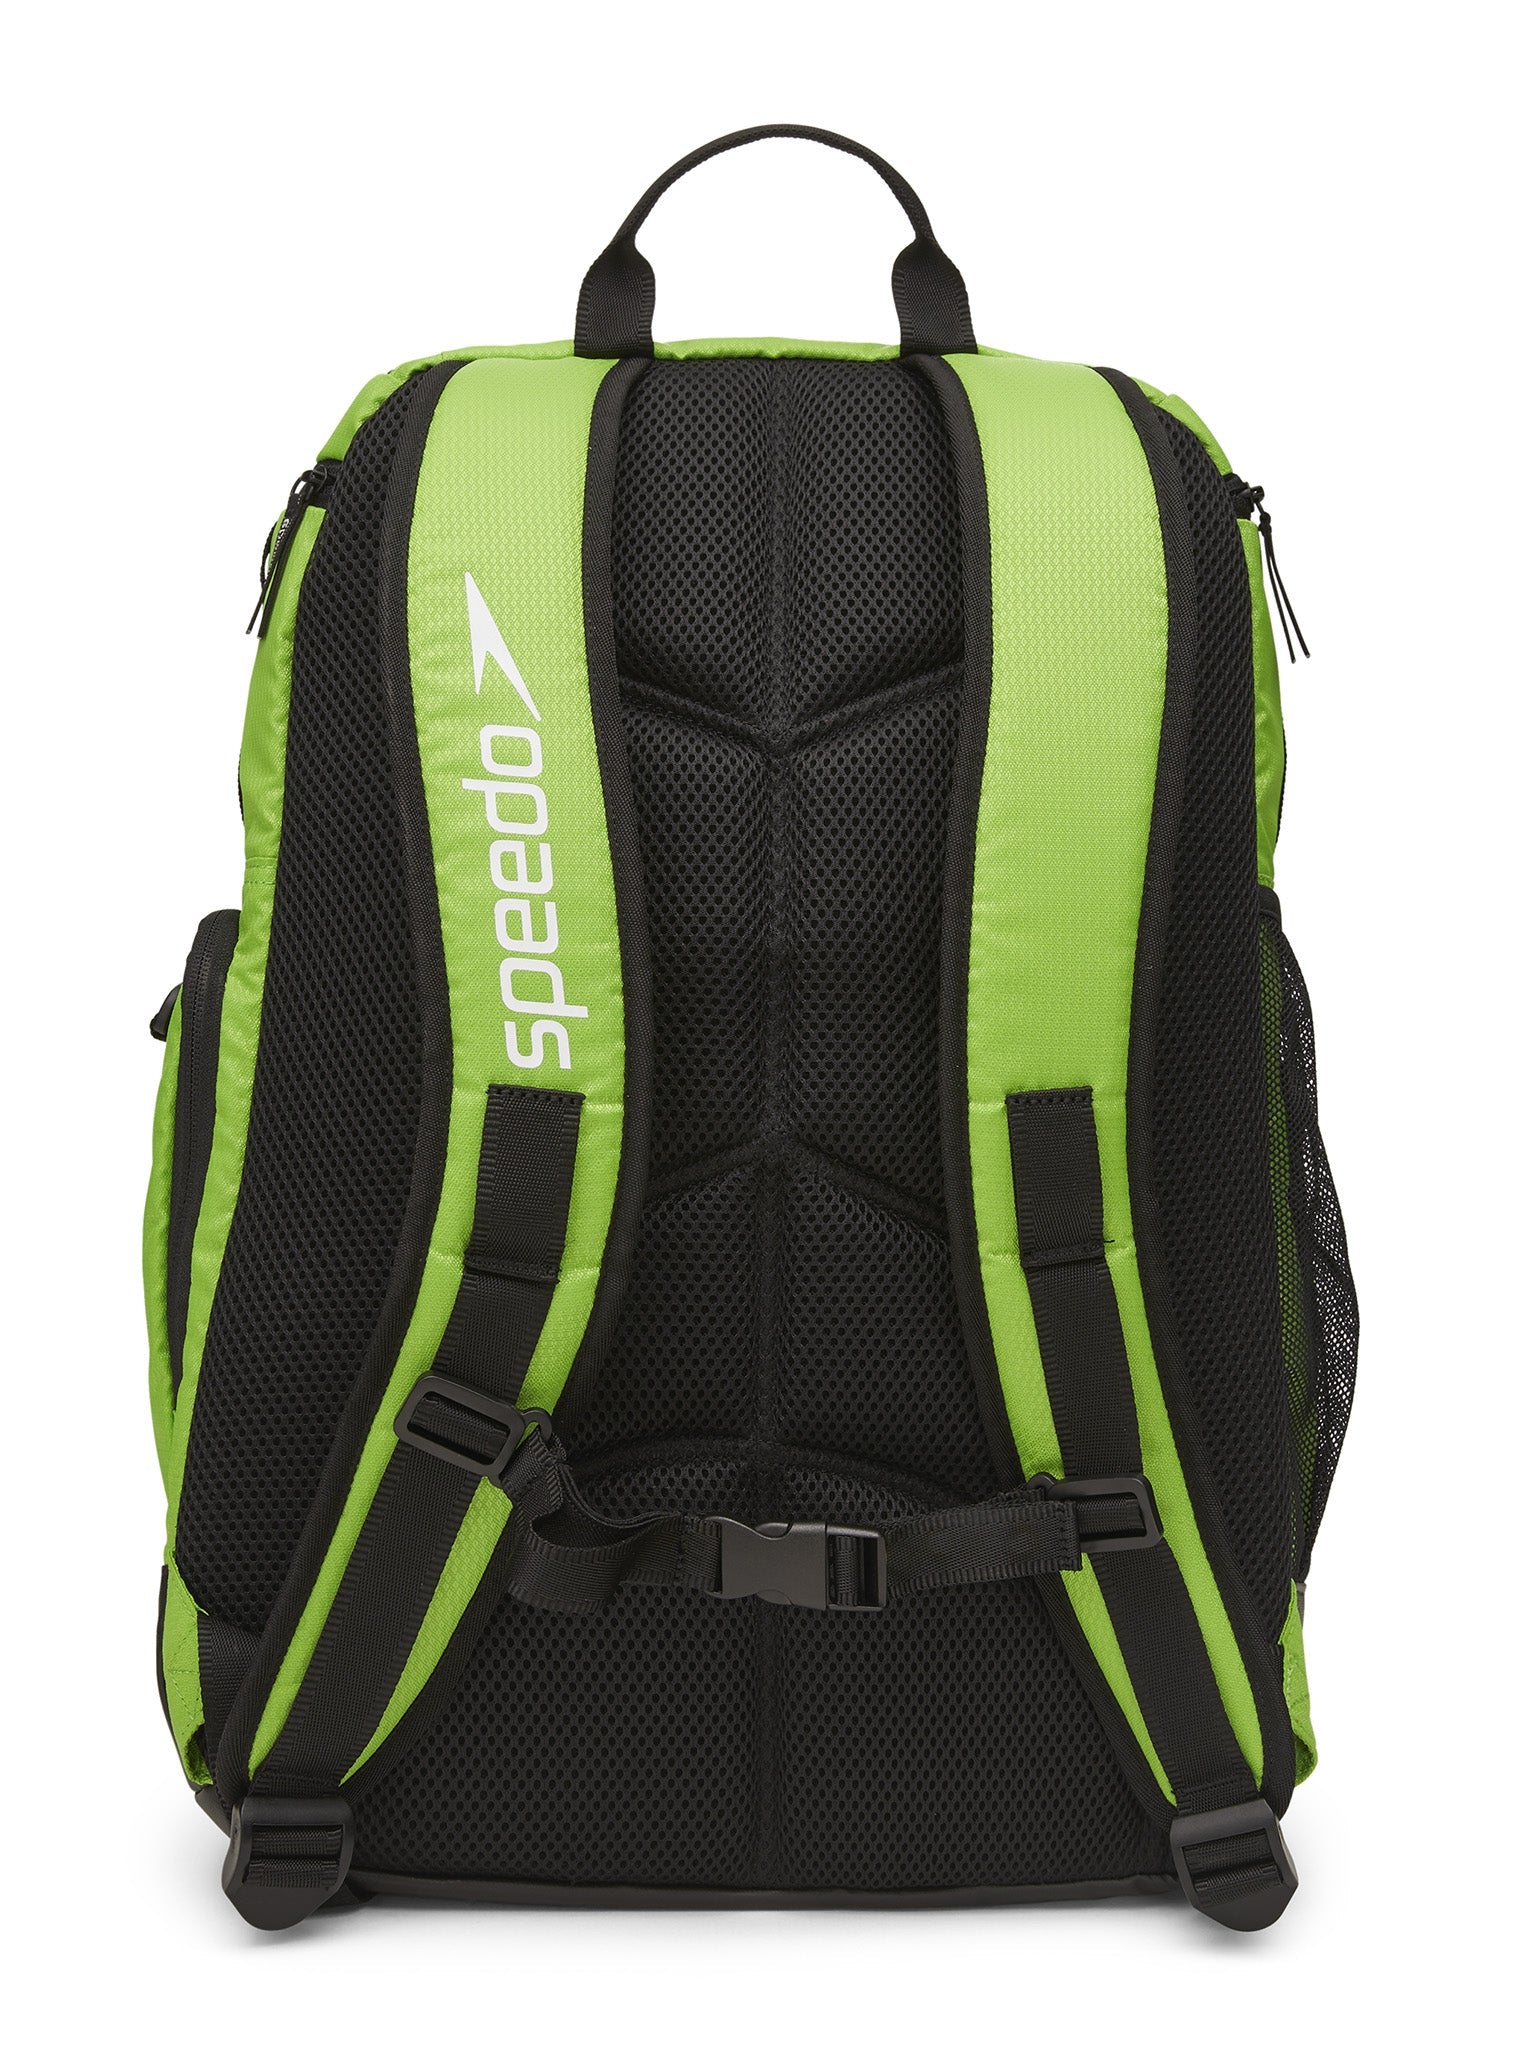 Teamster 2.0 Backpack - Lime